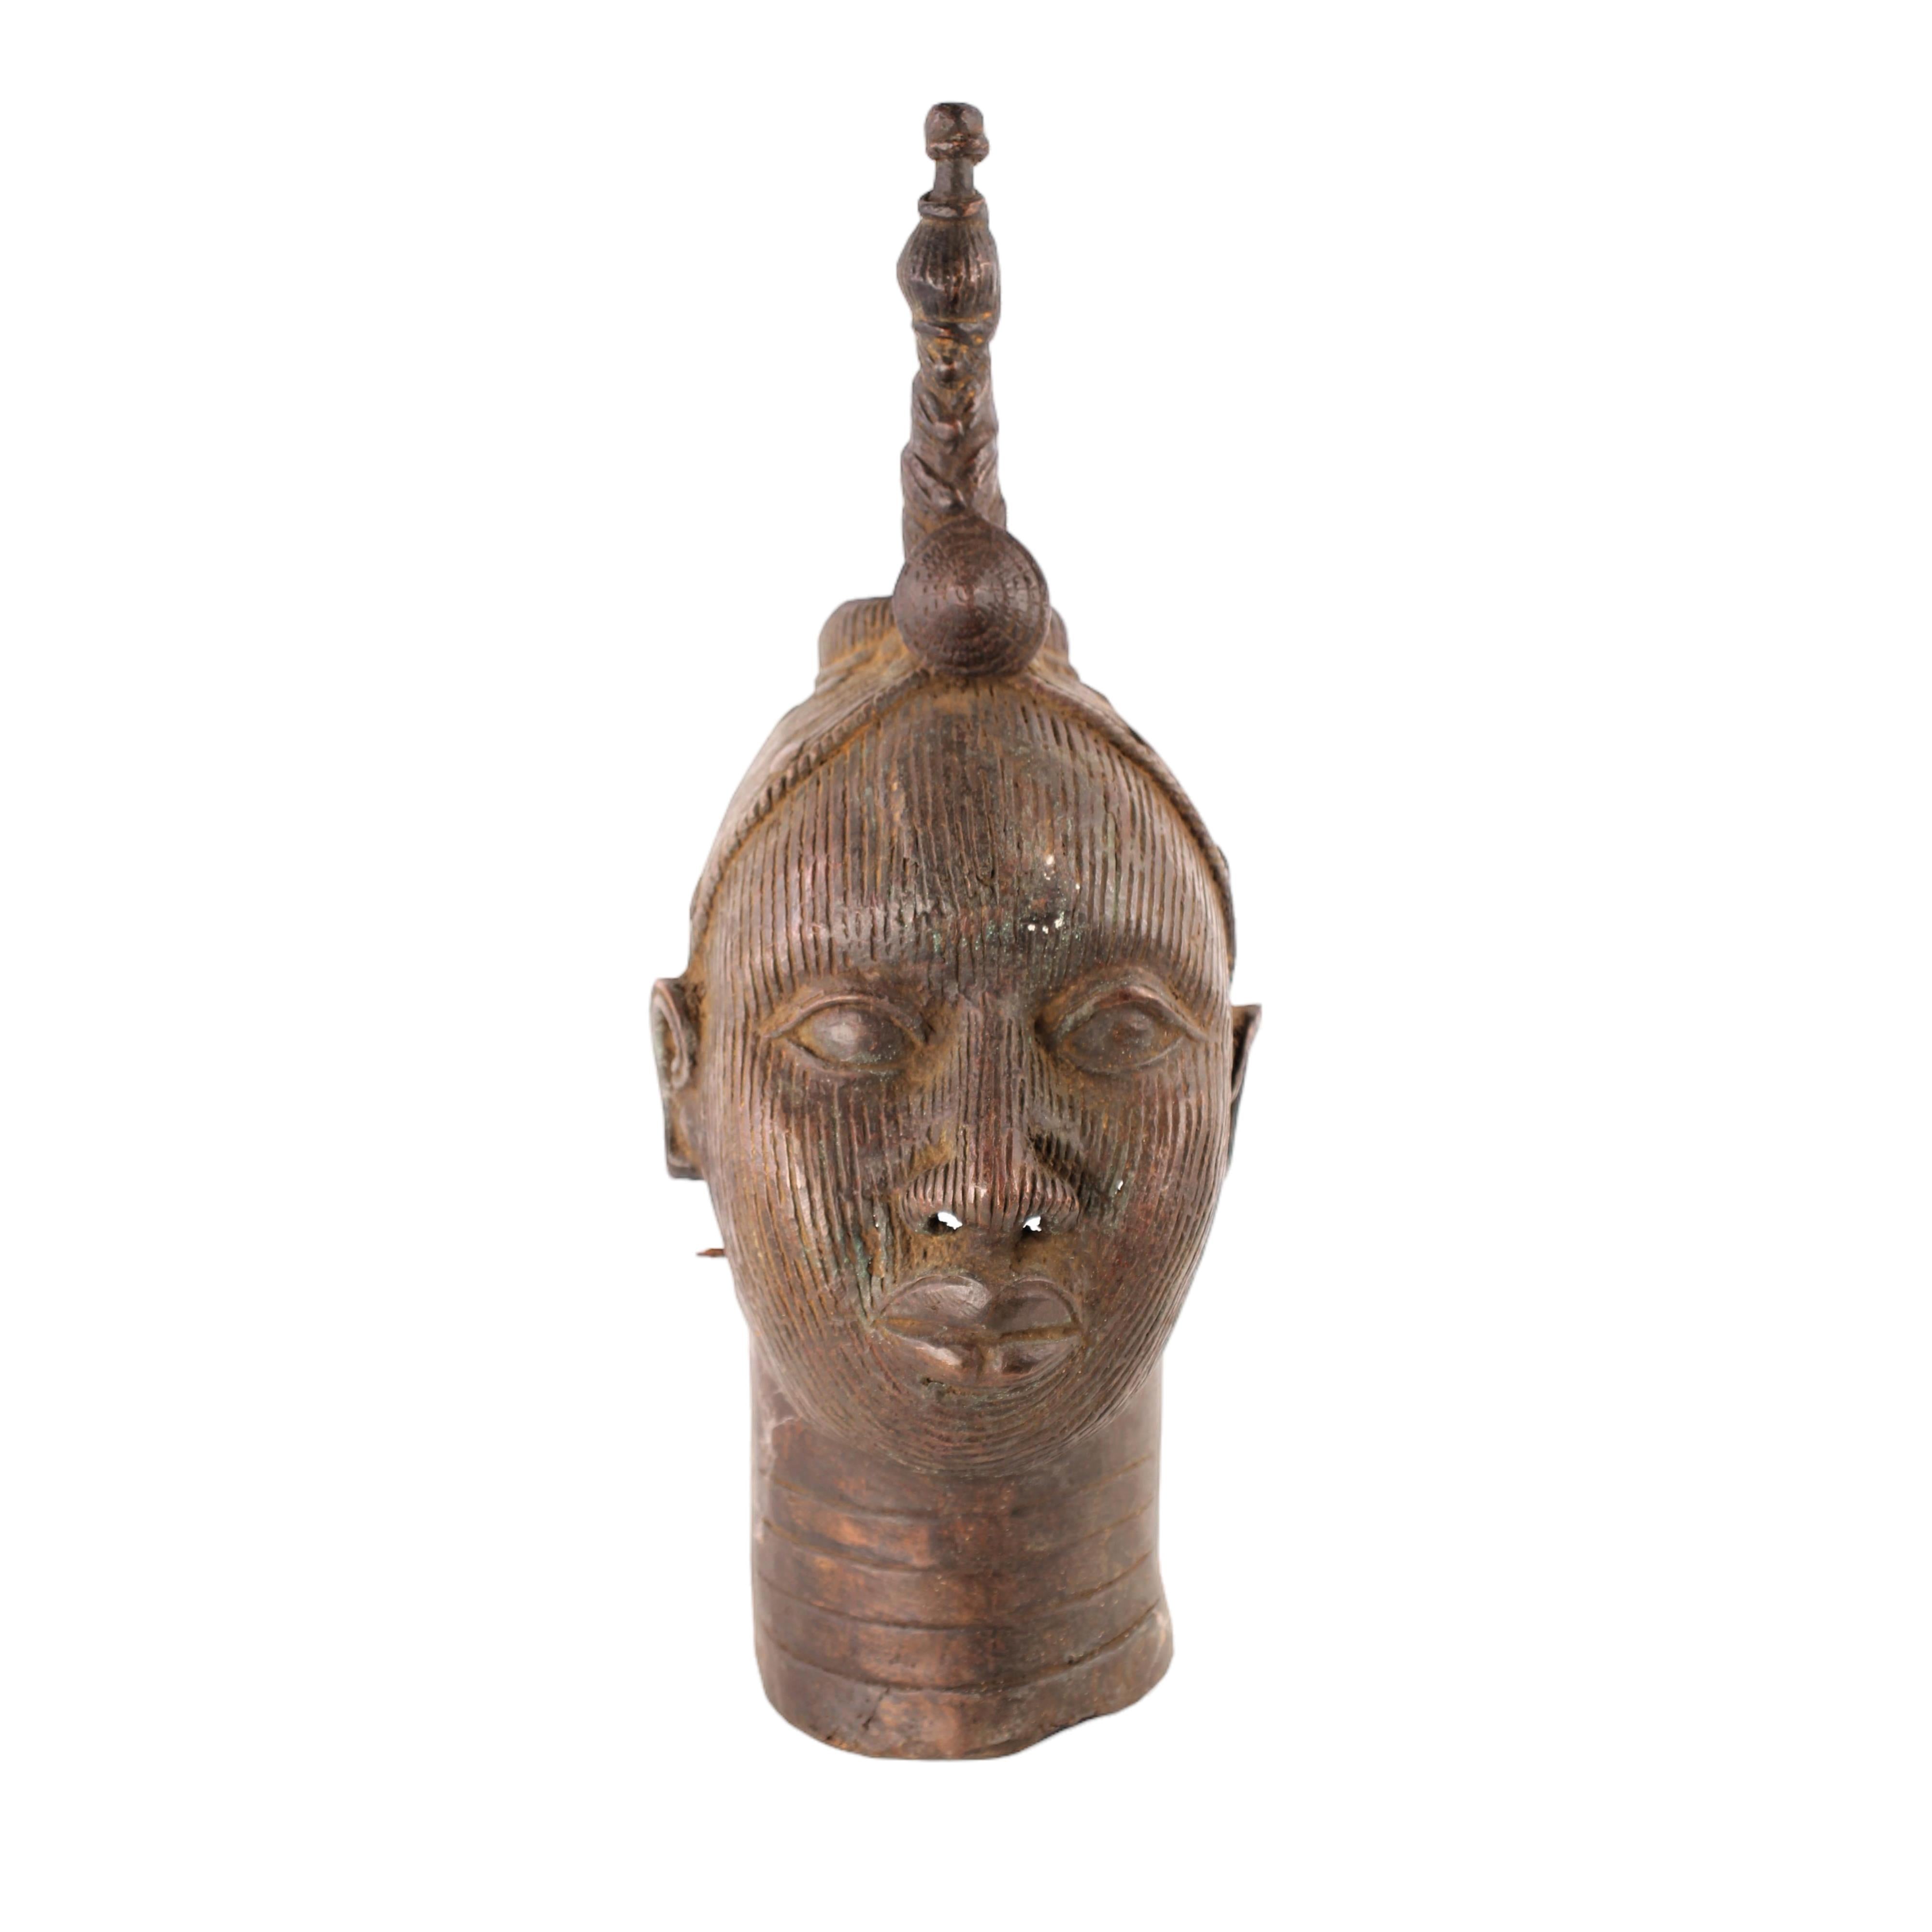 Yoruba Tribe Heads ~15.0" Tall - Heads